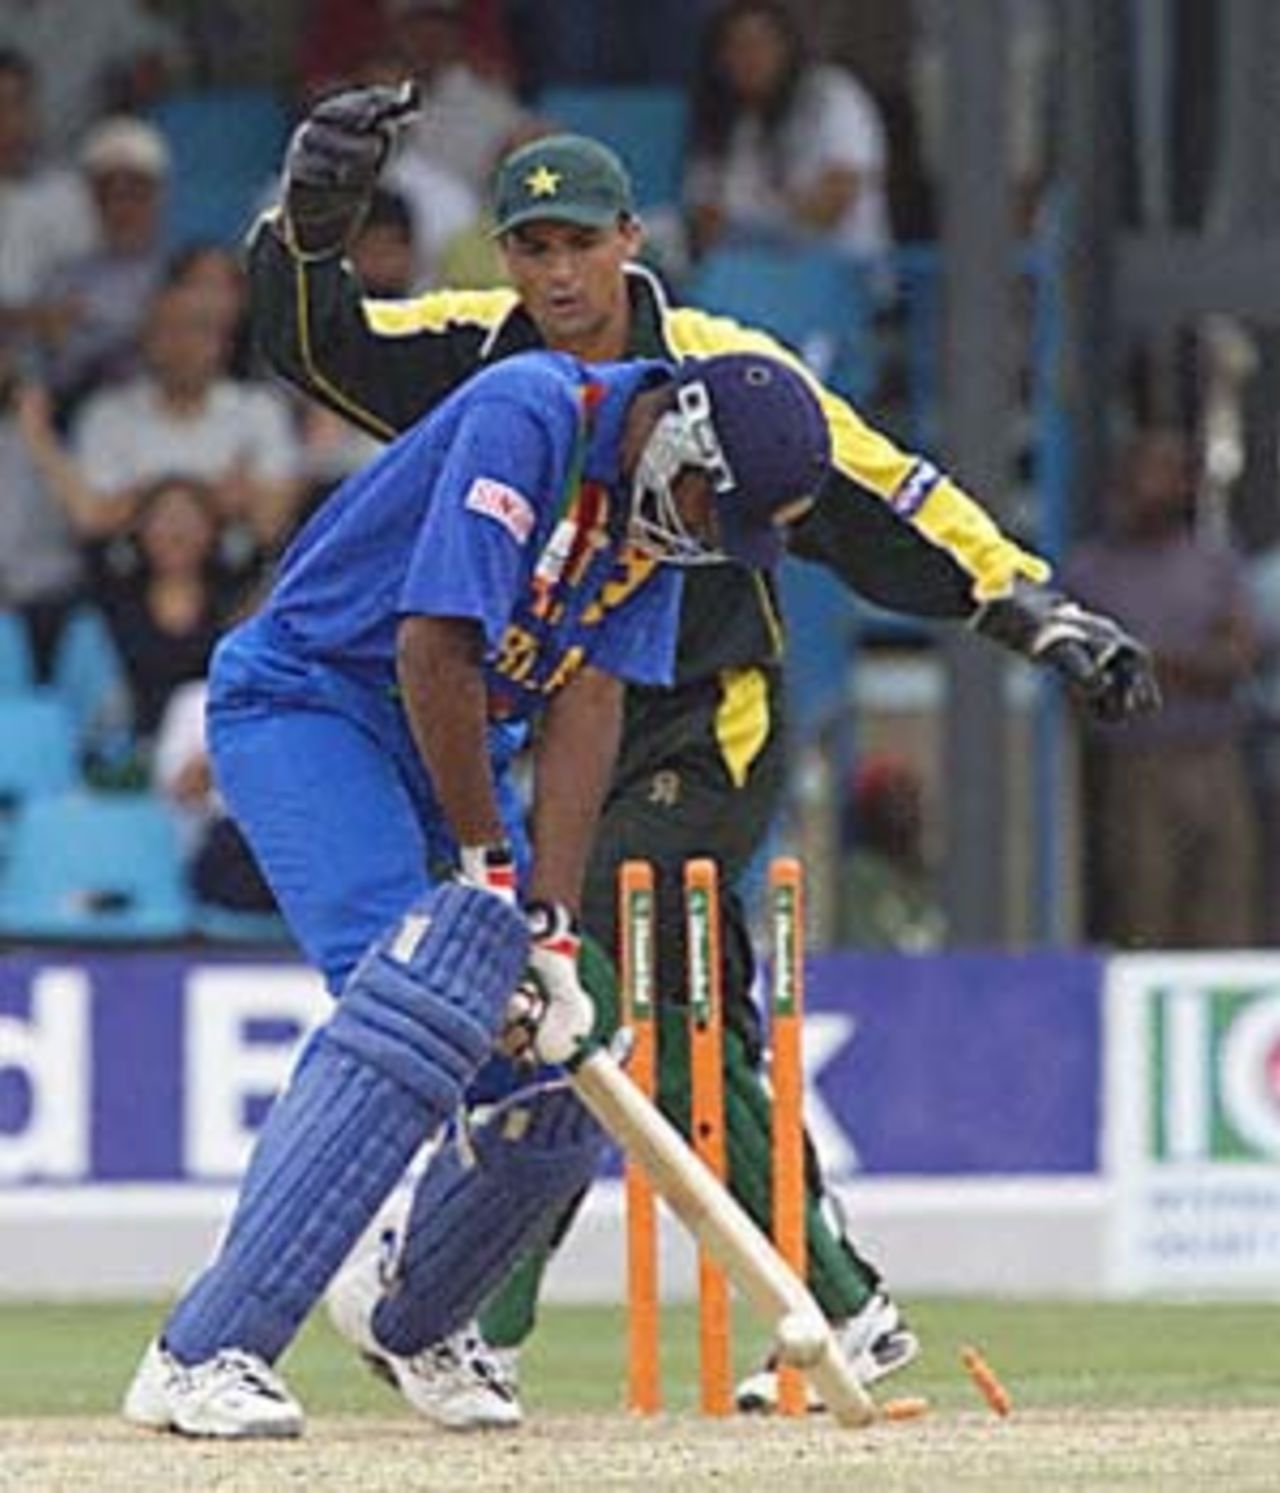 Nuwan Zoysa bowled by Pakistan bowler Azhar Mahmood, ICC KnockOut, 2000/01, 2nd Quarter Final, Pakistan v Sri Lanka, Gymkhana Club Ground, Nairobi, 08 October 2000.